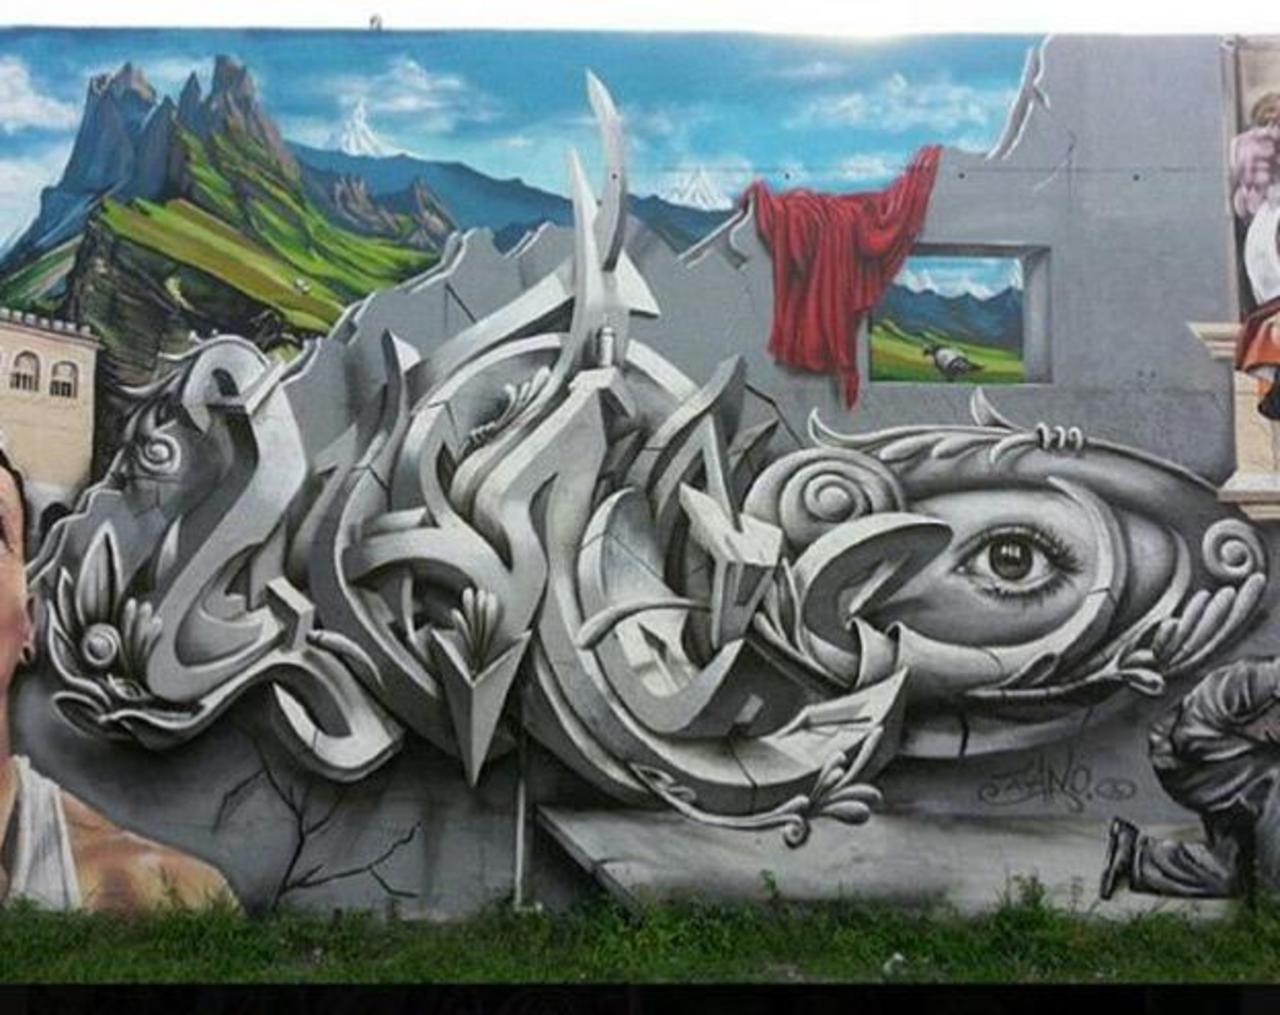 RT belilac "RT belilac "RT belilac "Street Art by Smog One

#art #mural #graffiti #streetart http://t.co/gcxi02JMUG"""